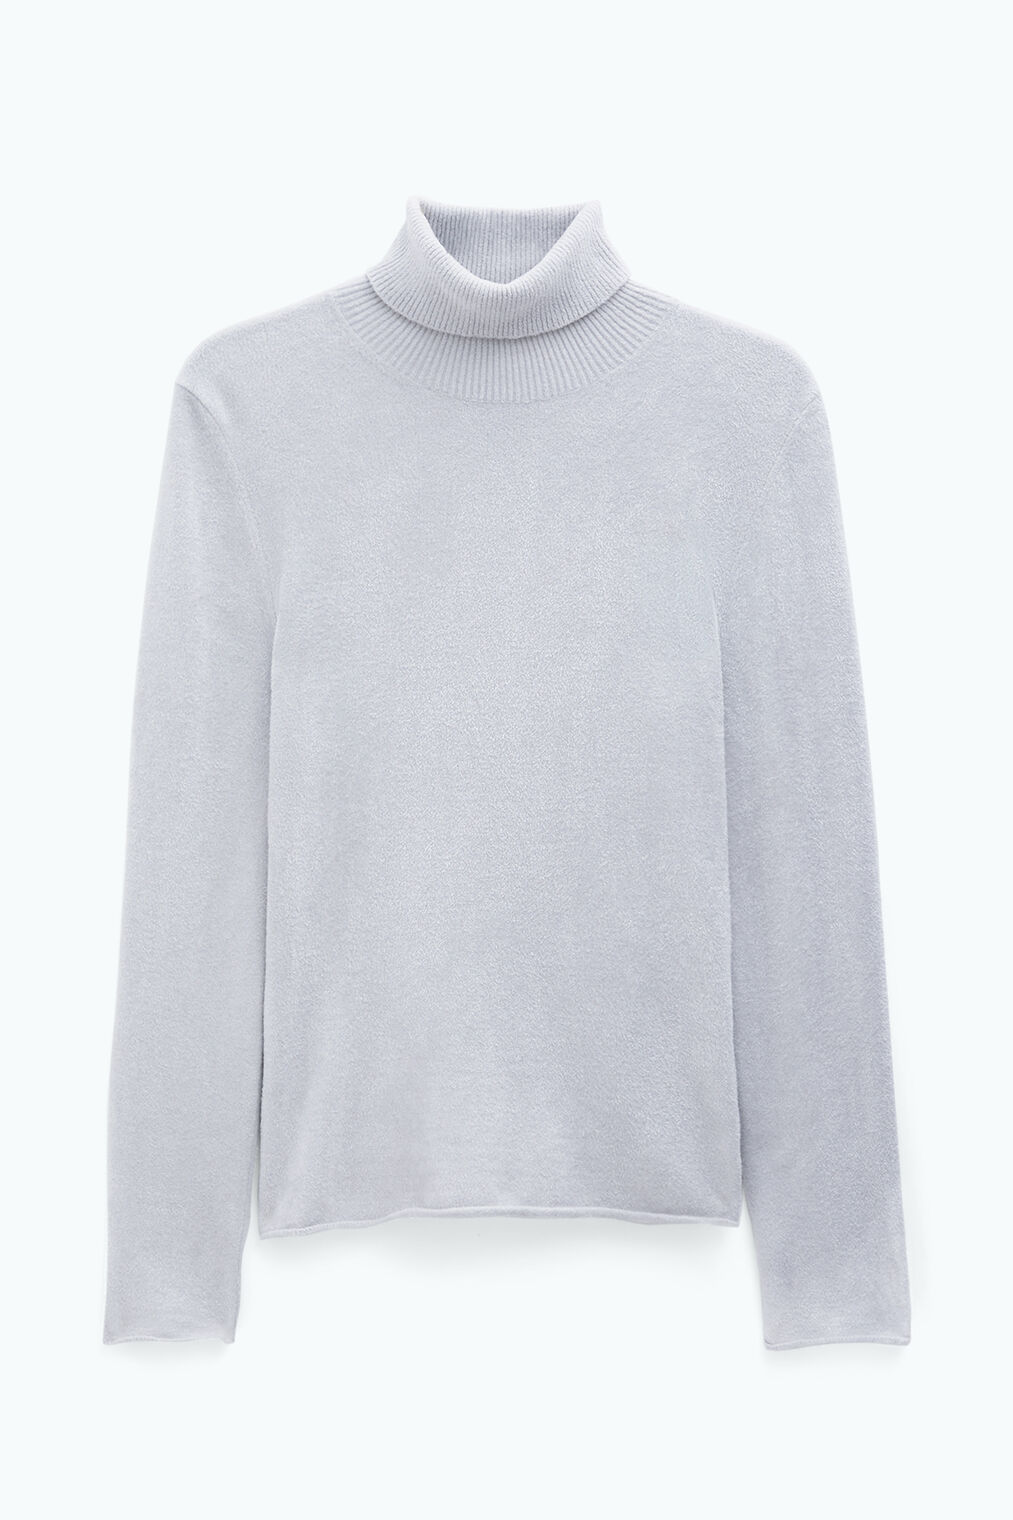 Chenille turtleneck sweater in pearl grey